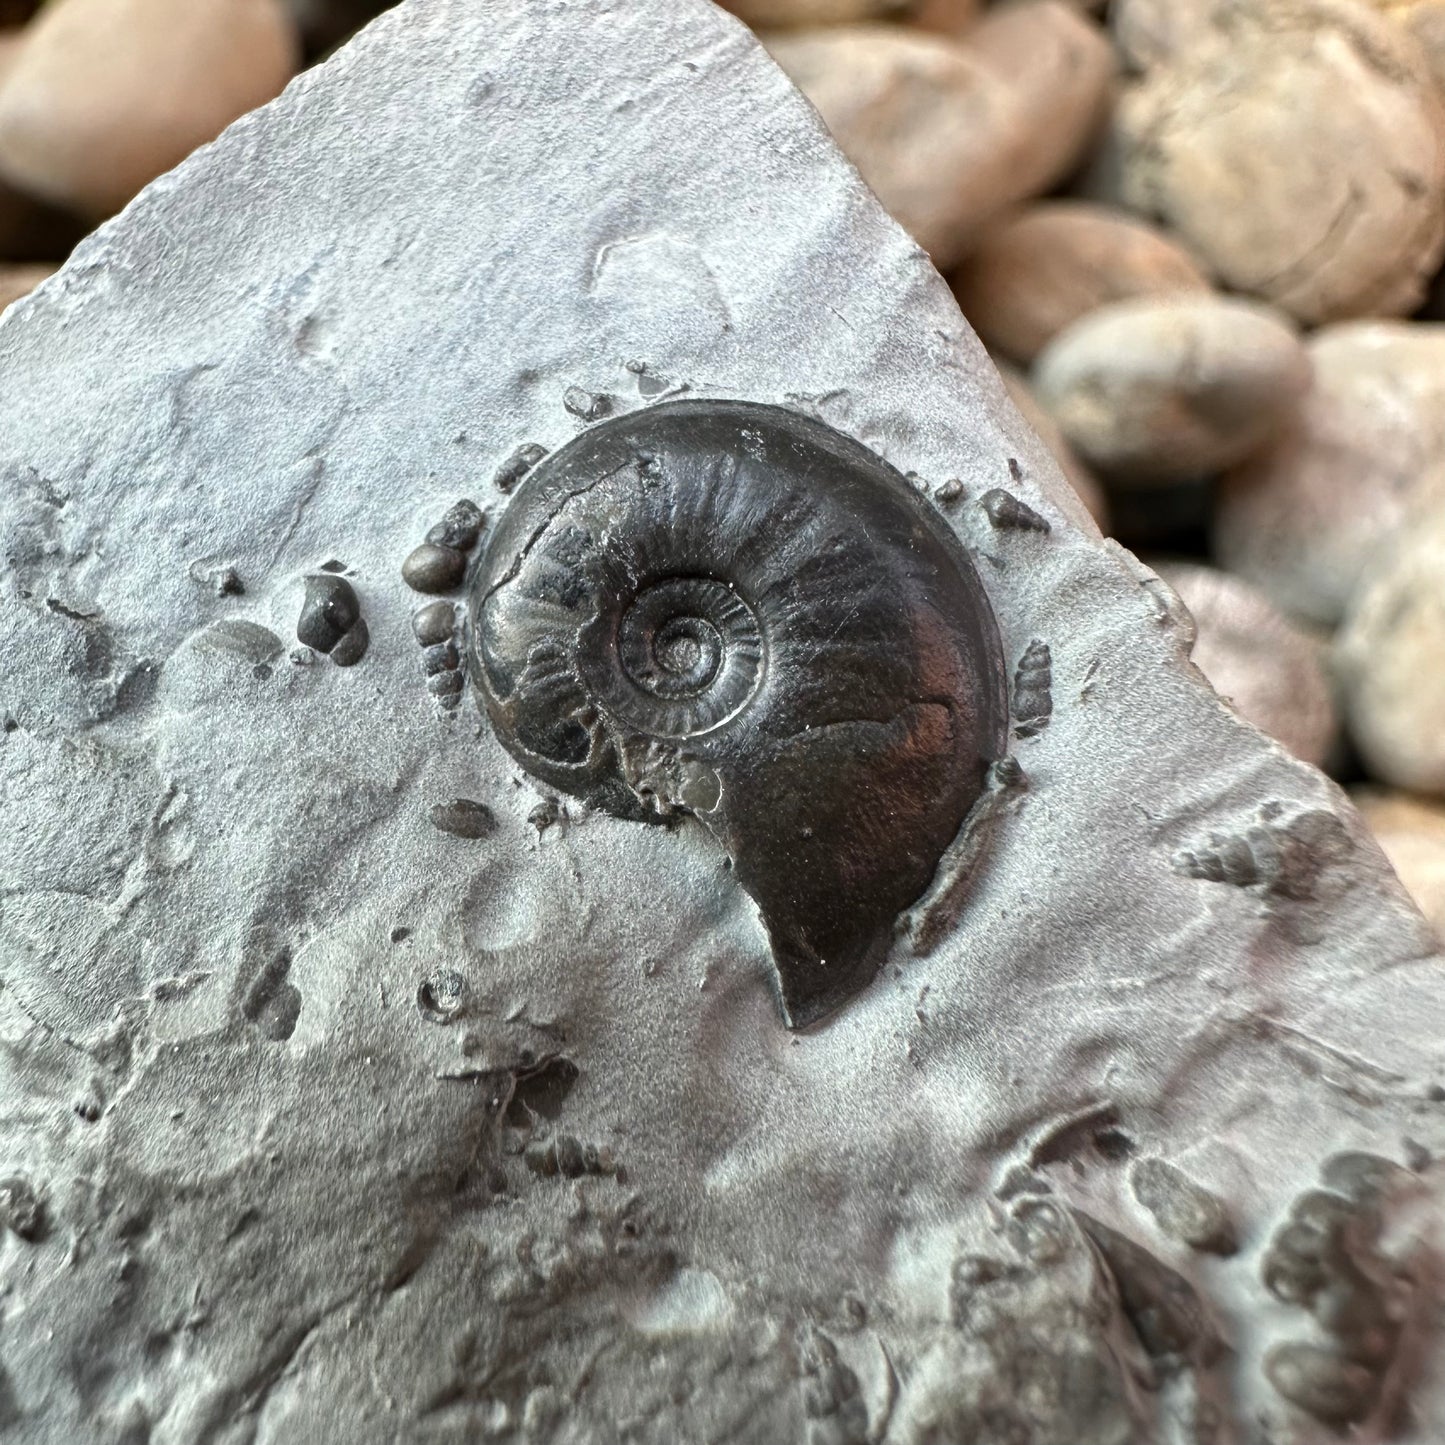 Oxynoticeras ammonite shell fossil - Whitby, North Yorkshire